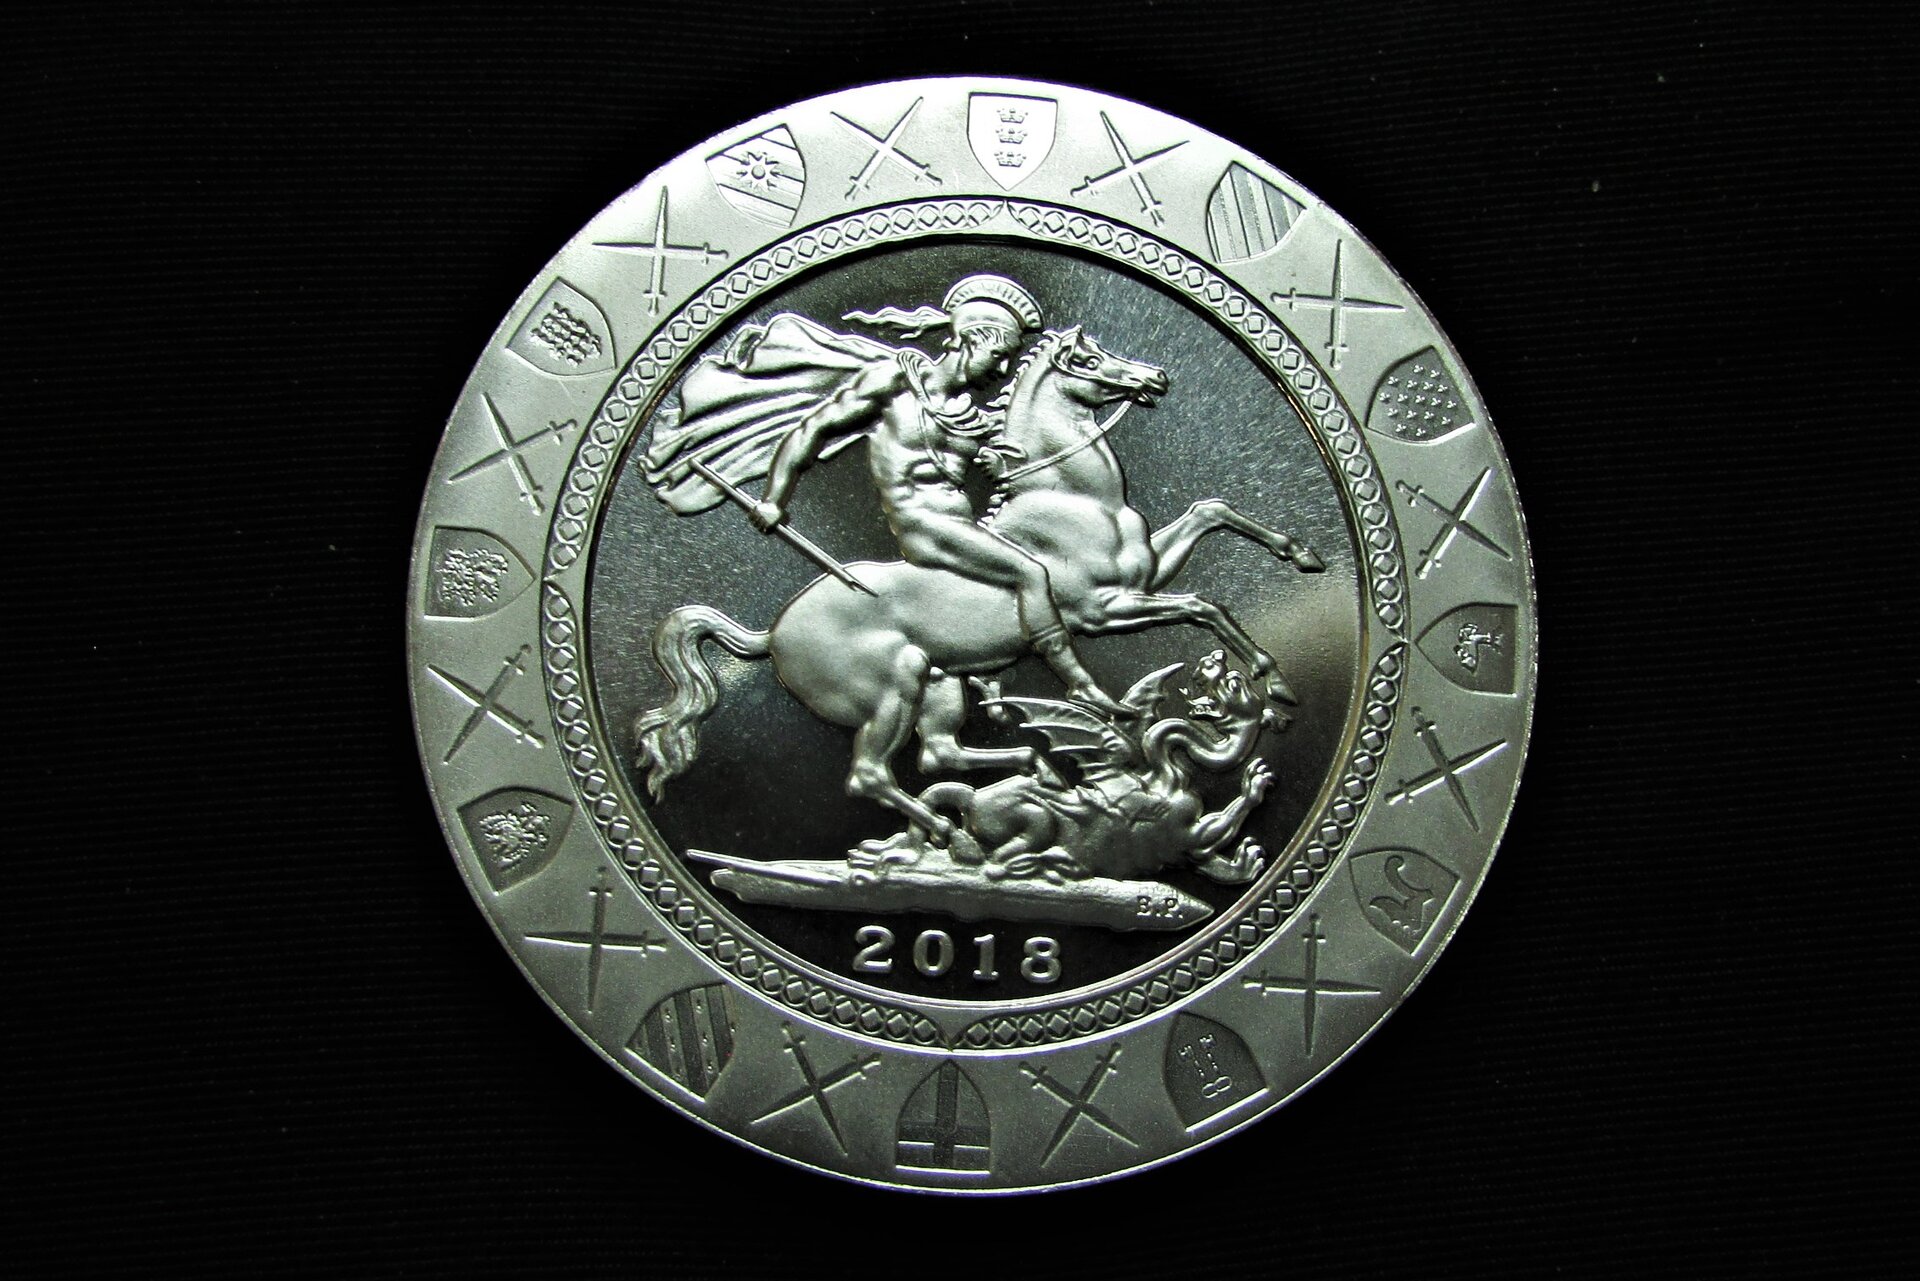 2018 KOTCT Medal (3 oz silver) - obverse.JPG